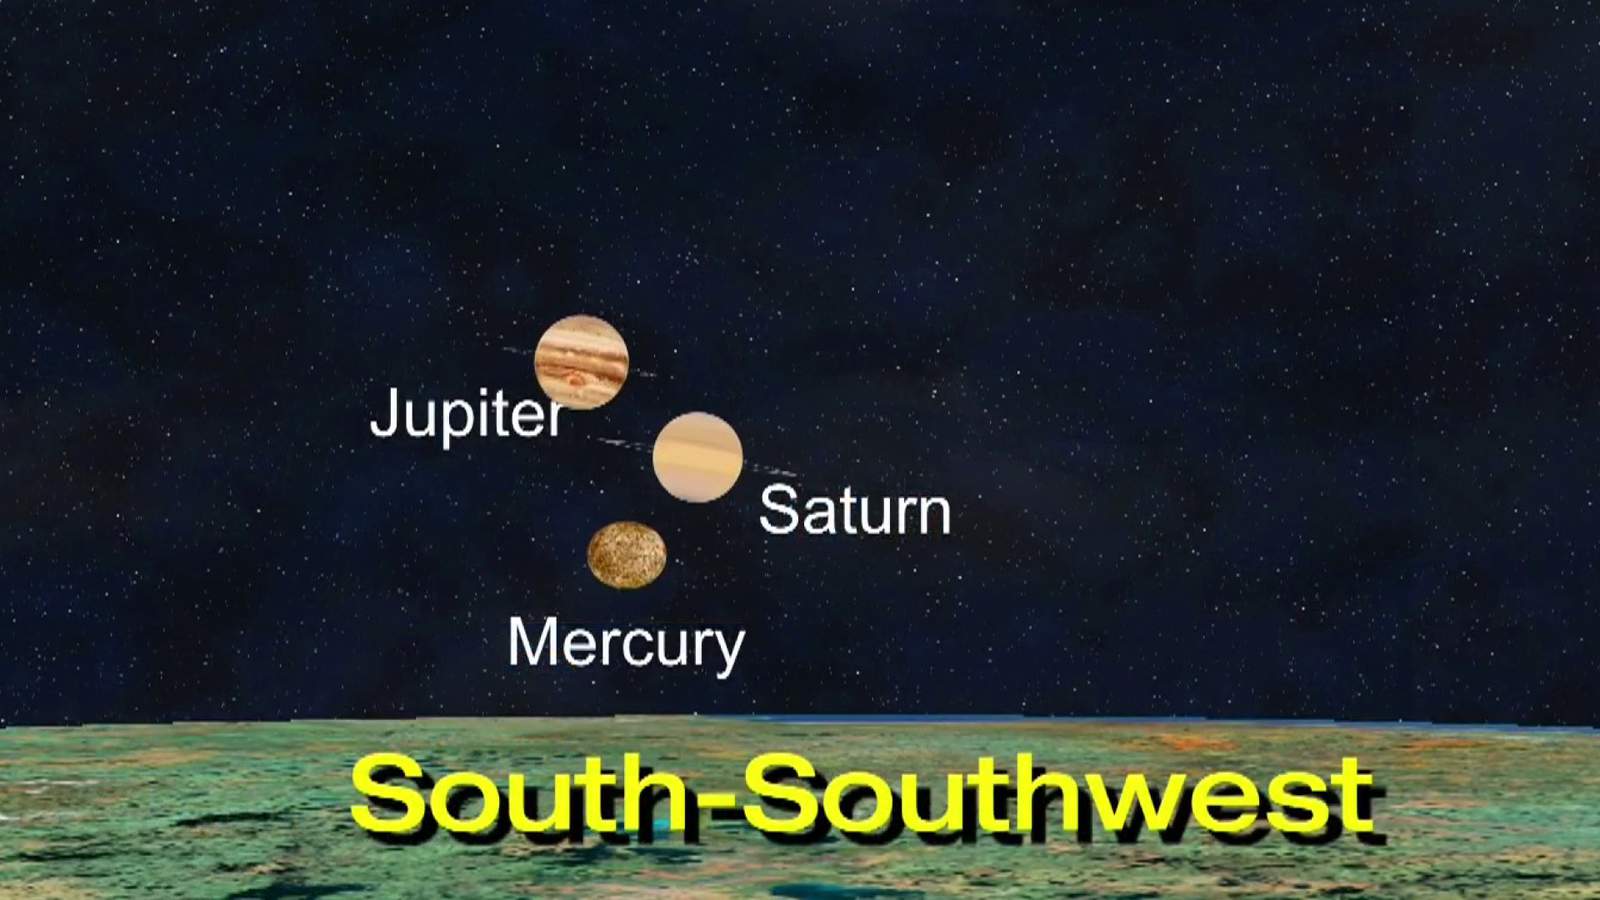 Metro Detroit weather: Fair skies as 3 planets align Saturday evening